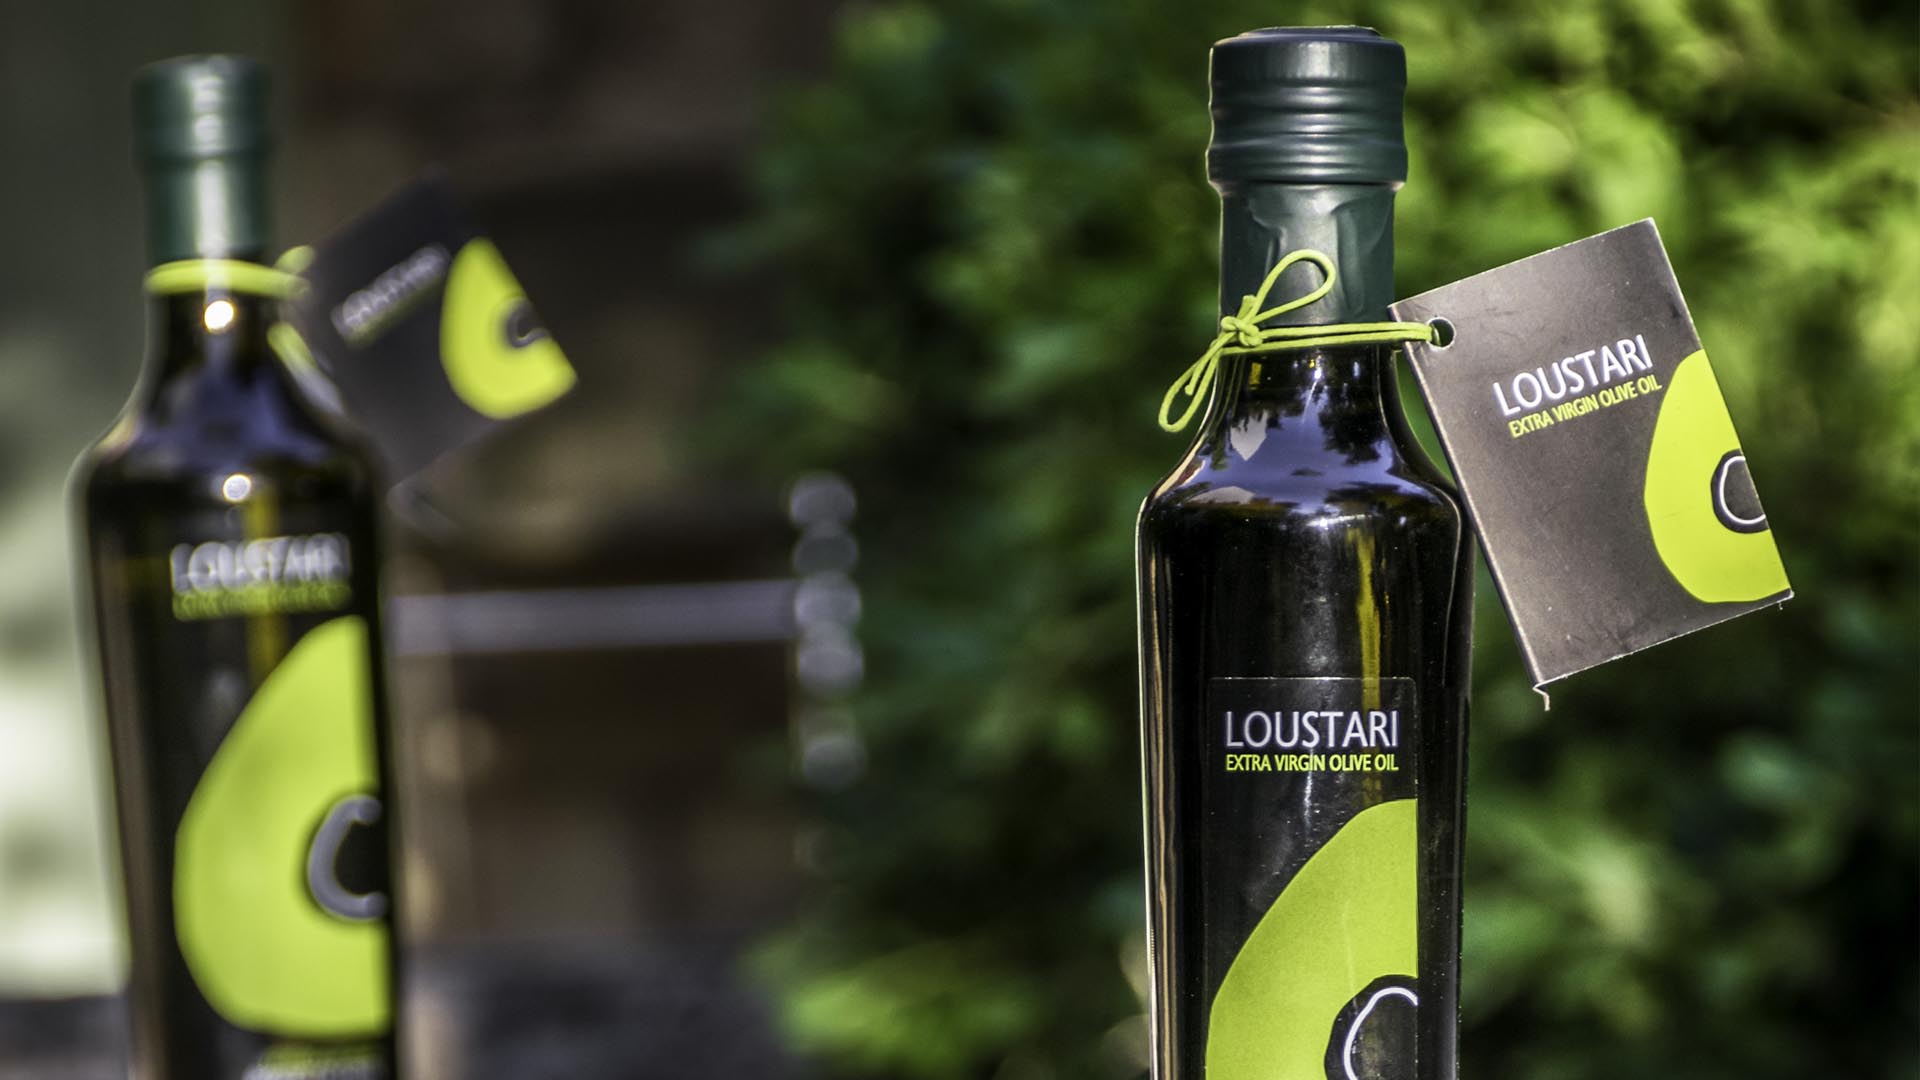 Loustari - Extra virgin olive oil